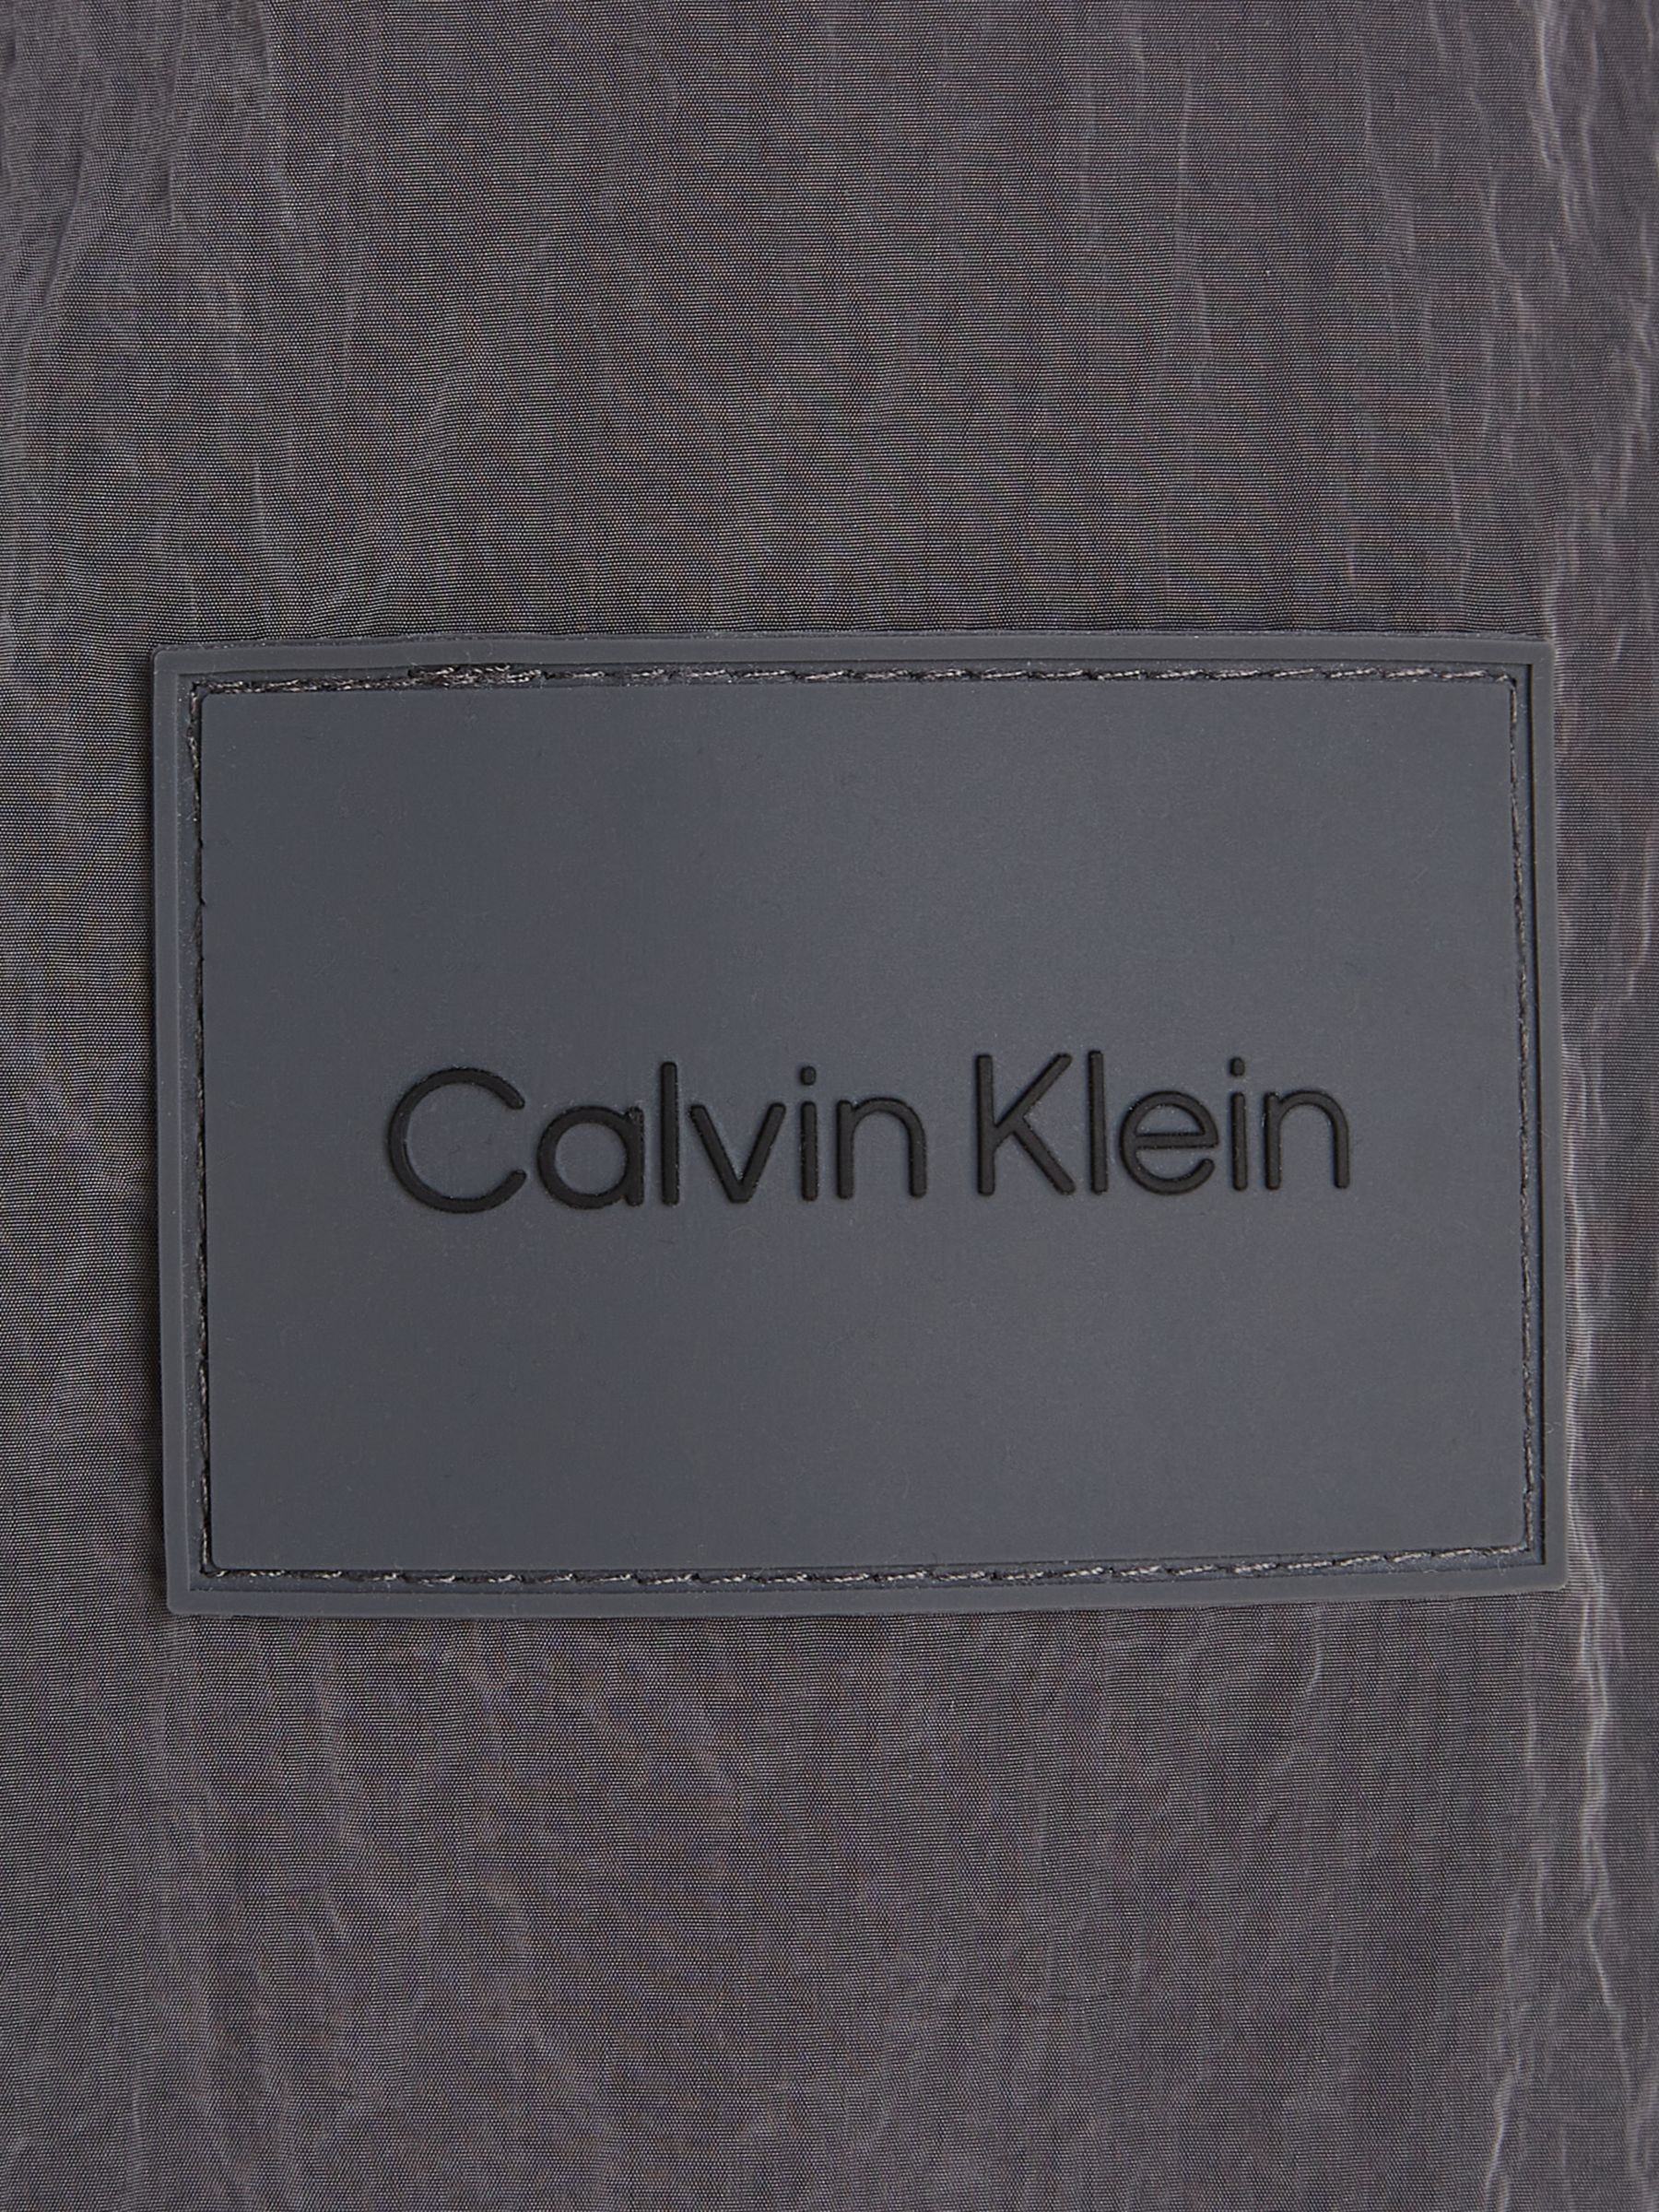 Calvin Klein Crinkle 2.0 Shirt Jacket, Grey, S